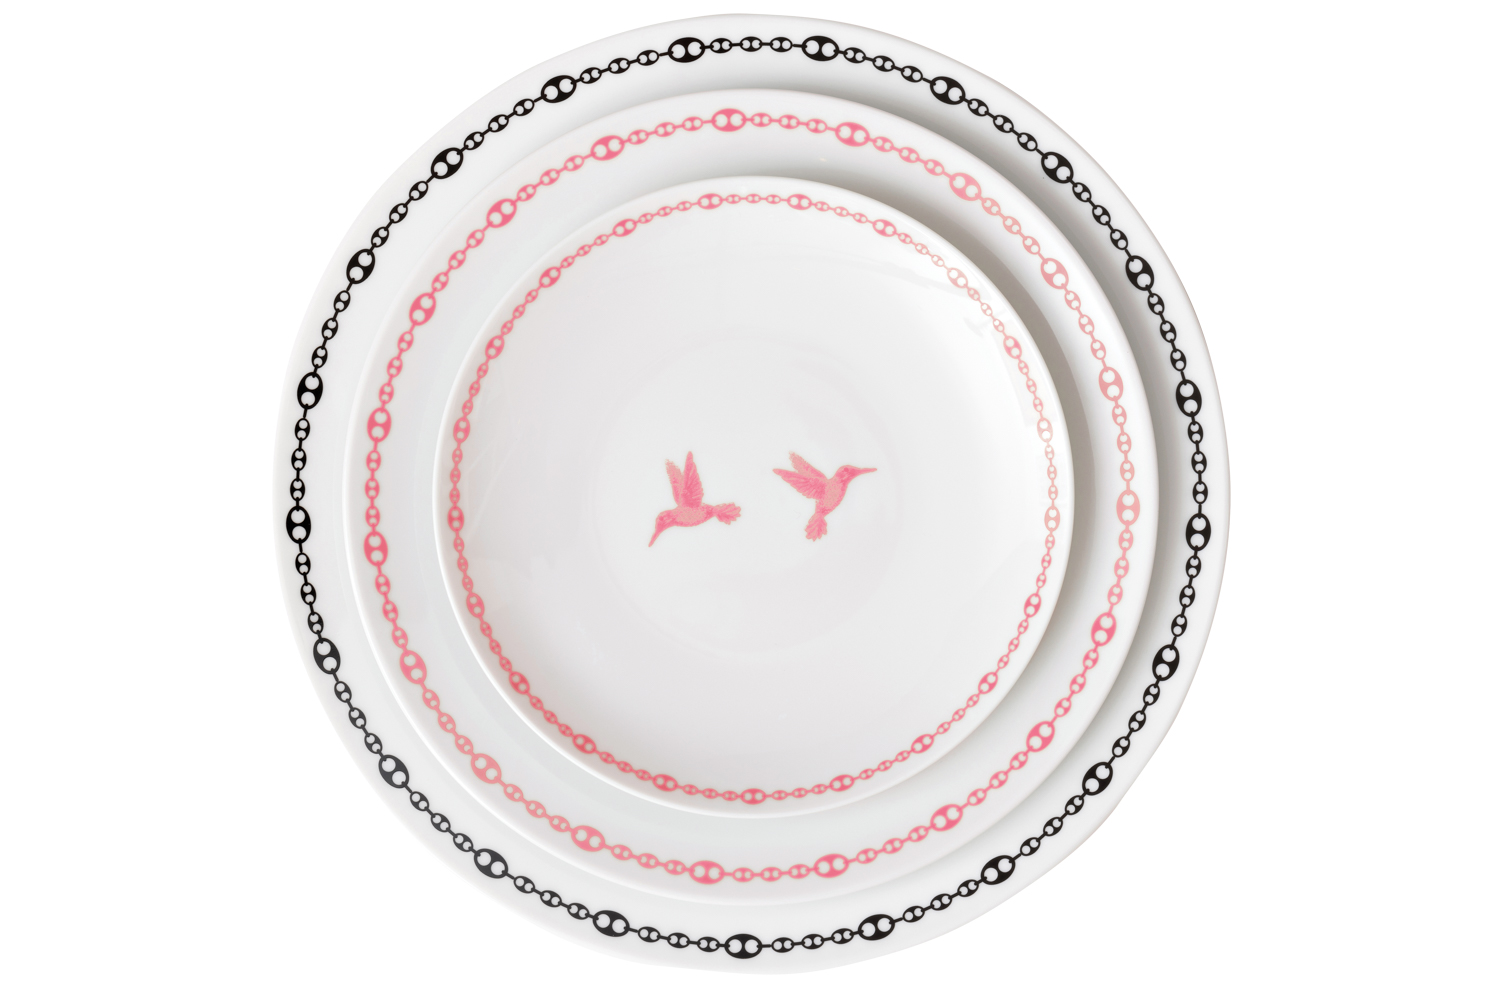 Dinner plates with a humming bird motif.